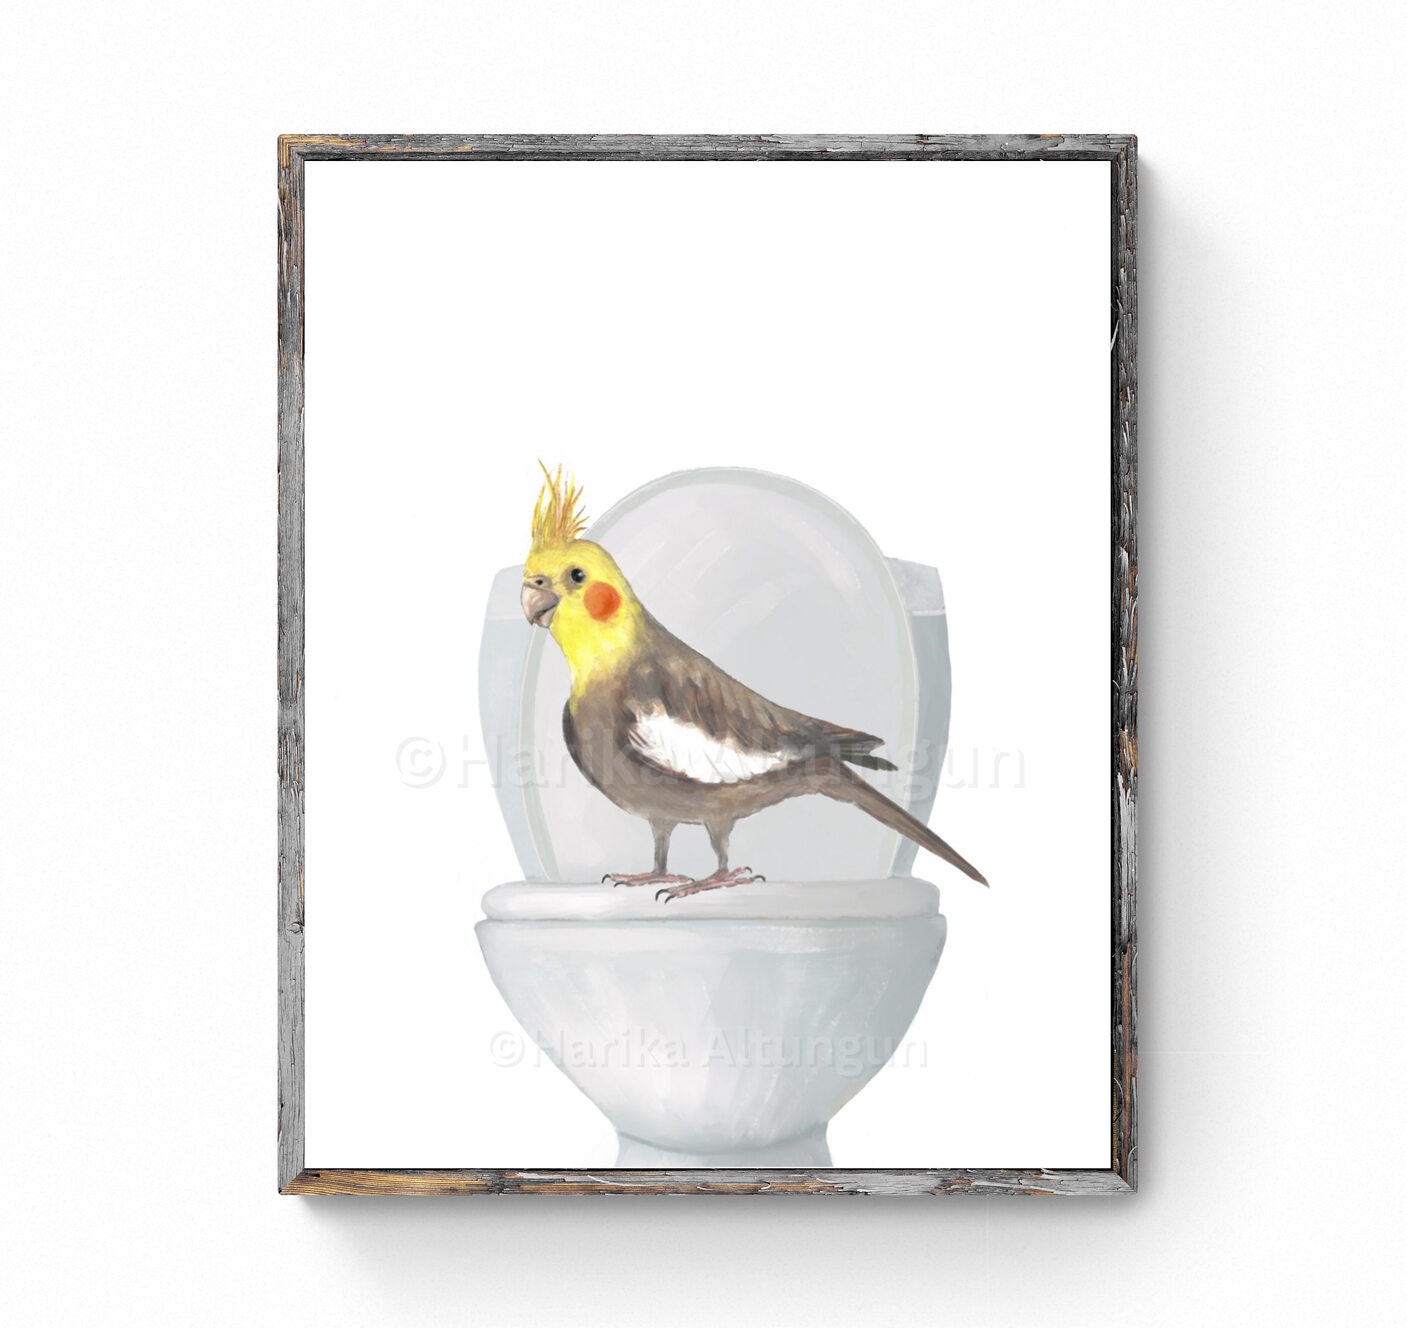 Cockatiel On Toilet Print, Cockatiel In Bathroom, Animal Bathroom Wall Art, Bird Memorial Painting, Parrot In Bath Print, Pet Mom Dad Gift